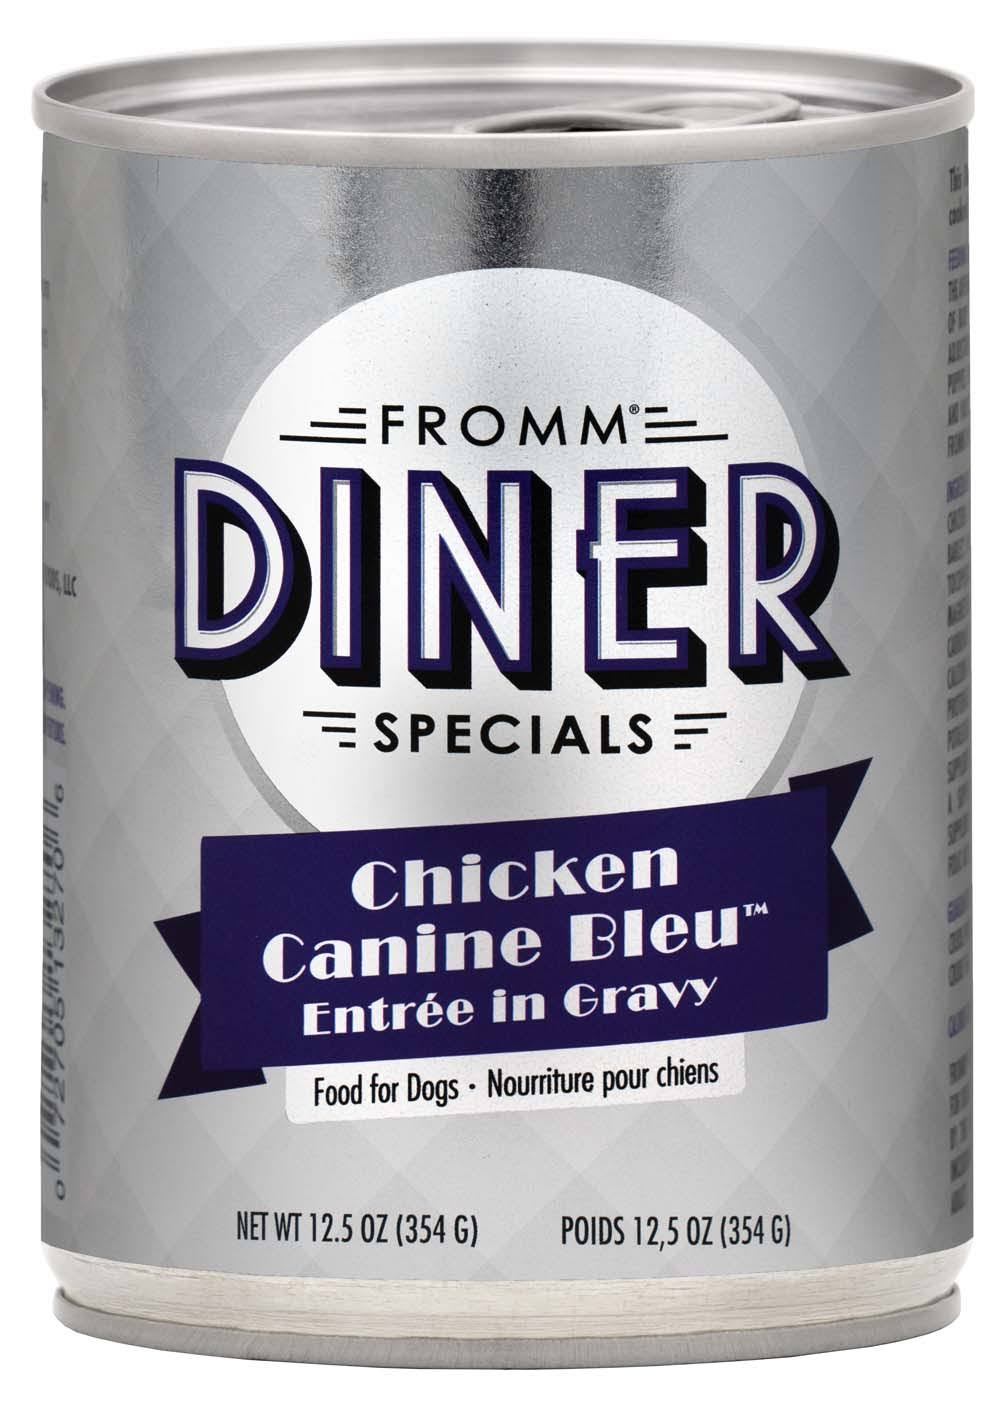 Fromm Diner Chicken Canine Bleu Entree Canned Dog Food 12.5oz